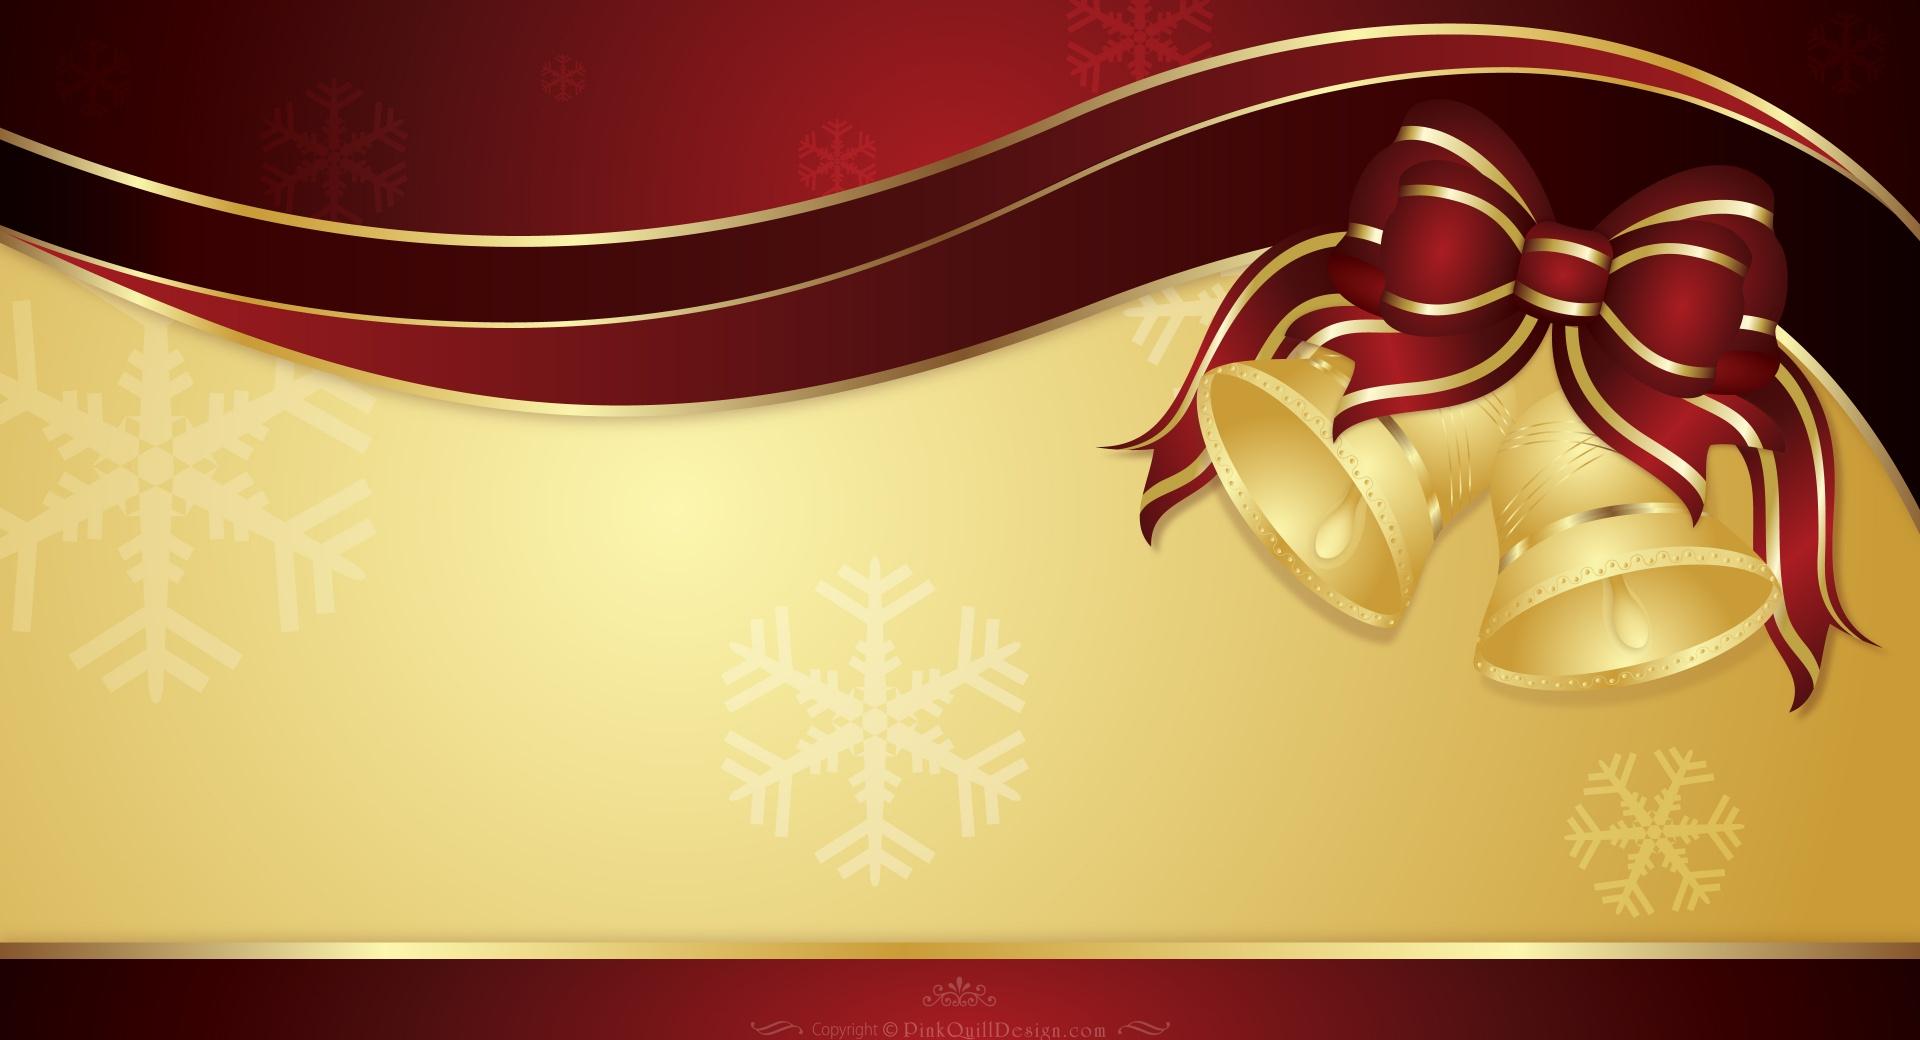 Jingle Bells at 1024 x 1024 iPad size wallpapers HD quality